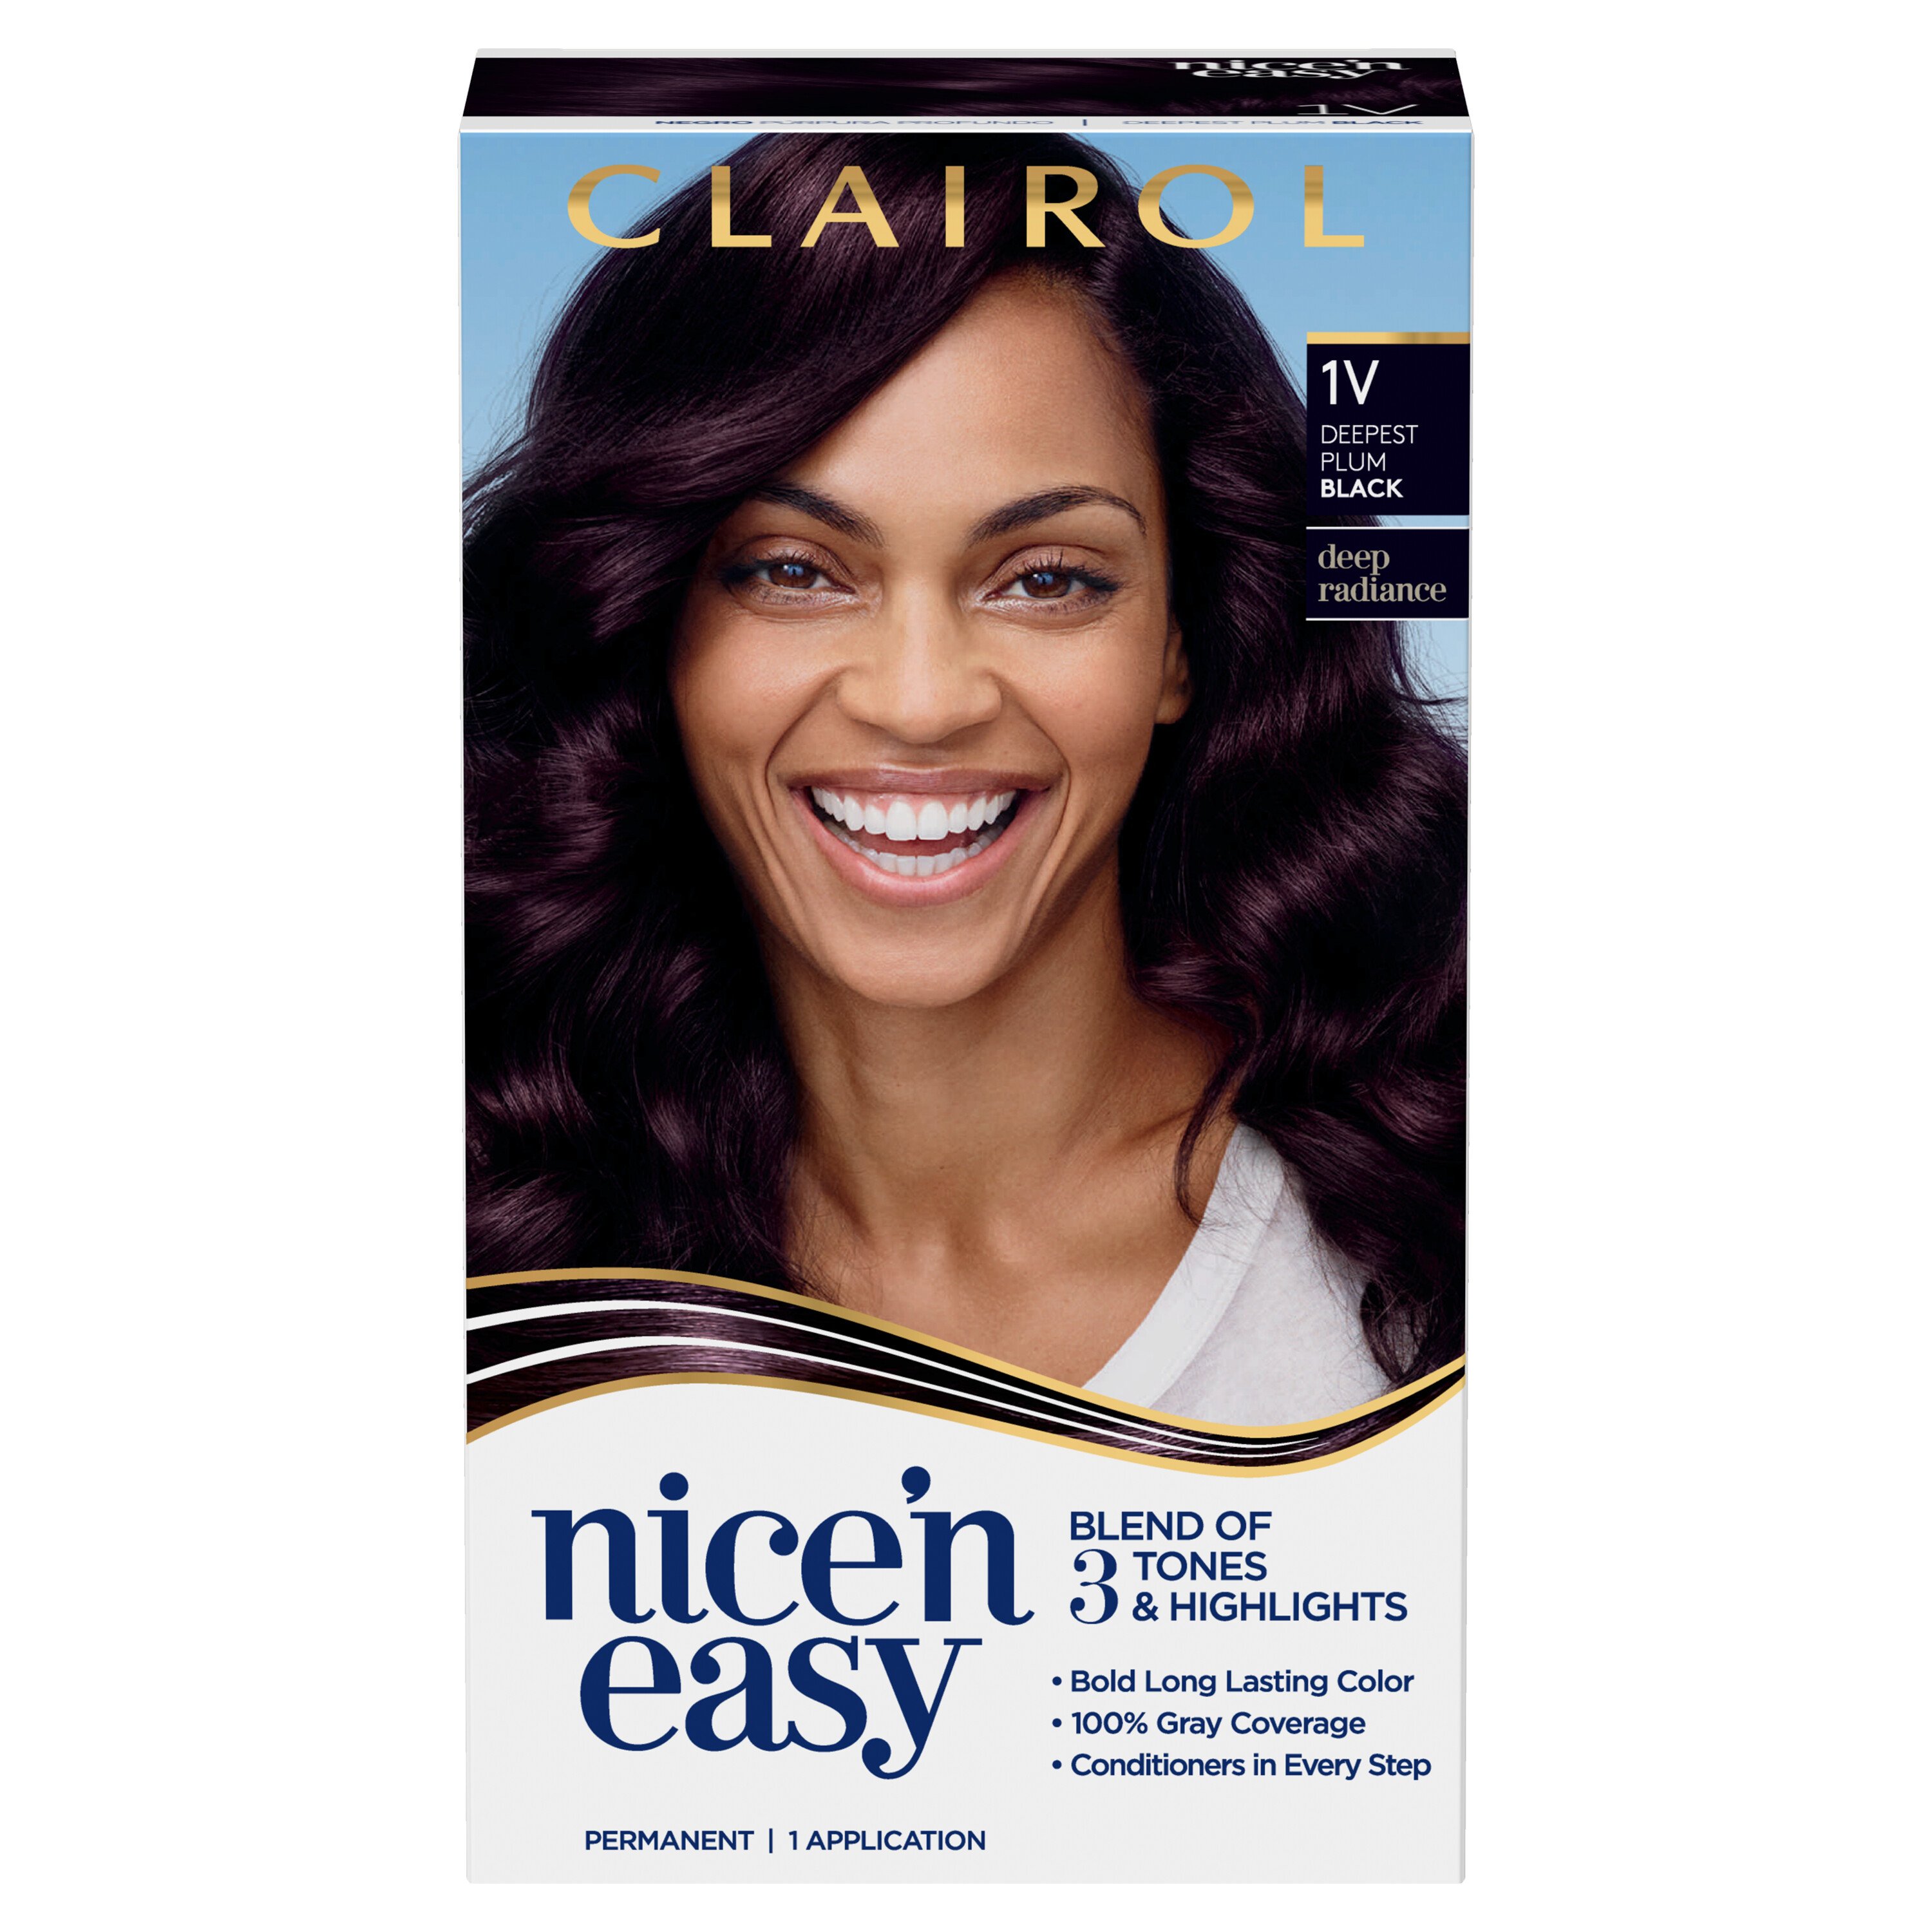 Clairol Nice 'N Easy Permanent Hair Color 1V Deepest Plum Black - Shop ...